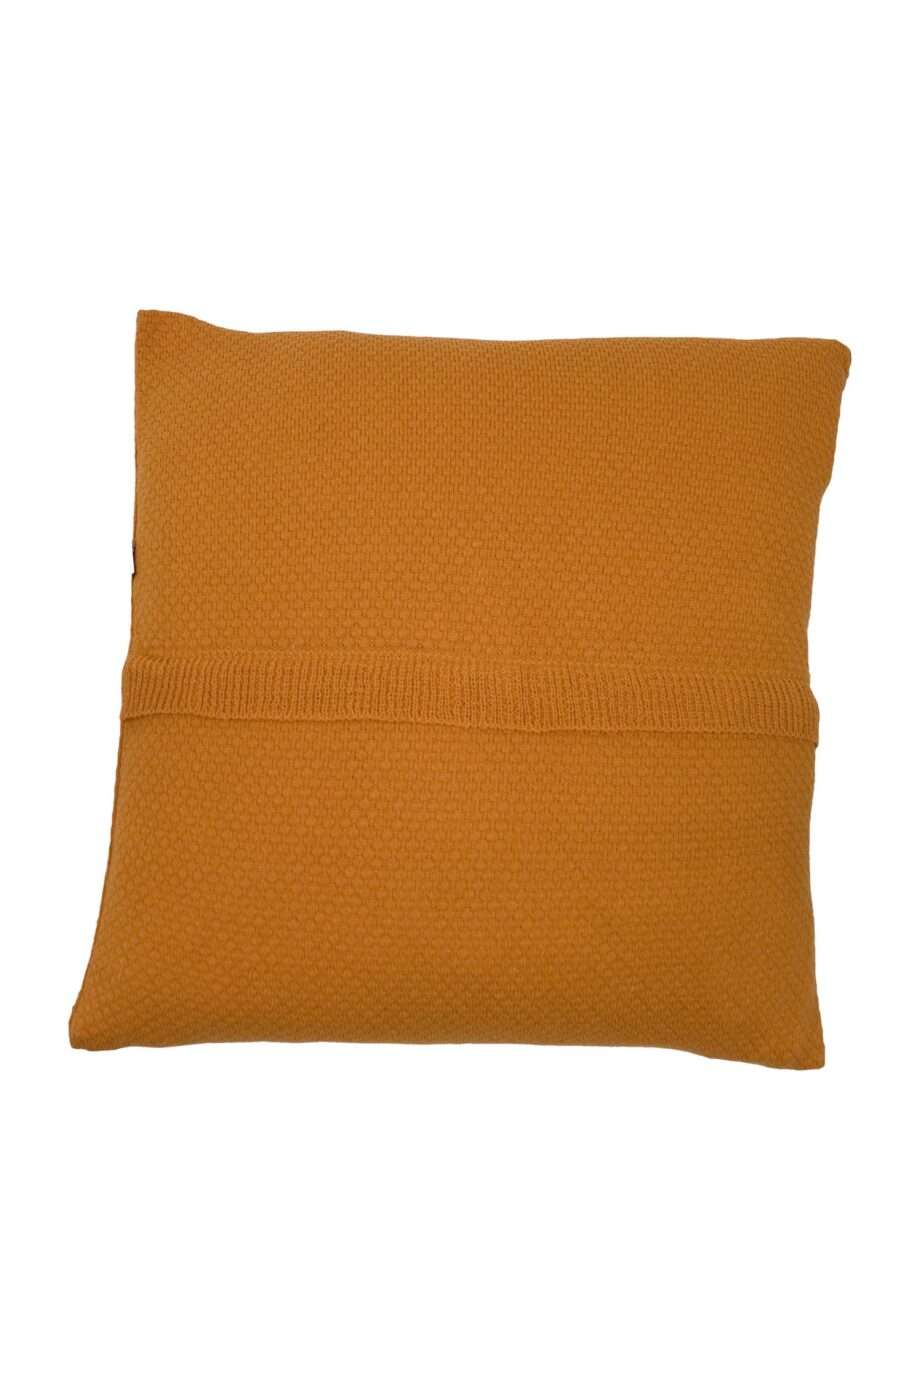 liz orange knitted cotton pillowcase xsmall